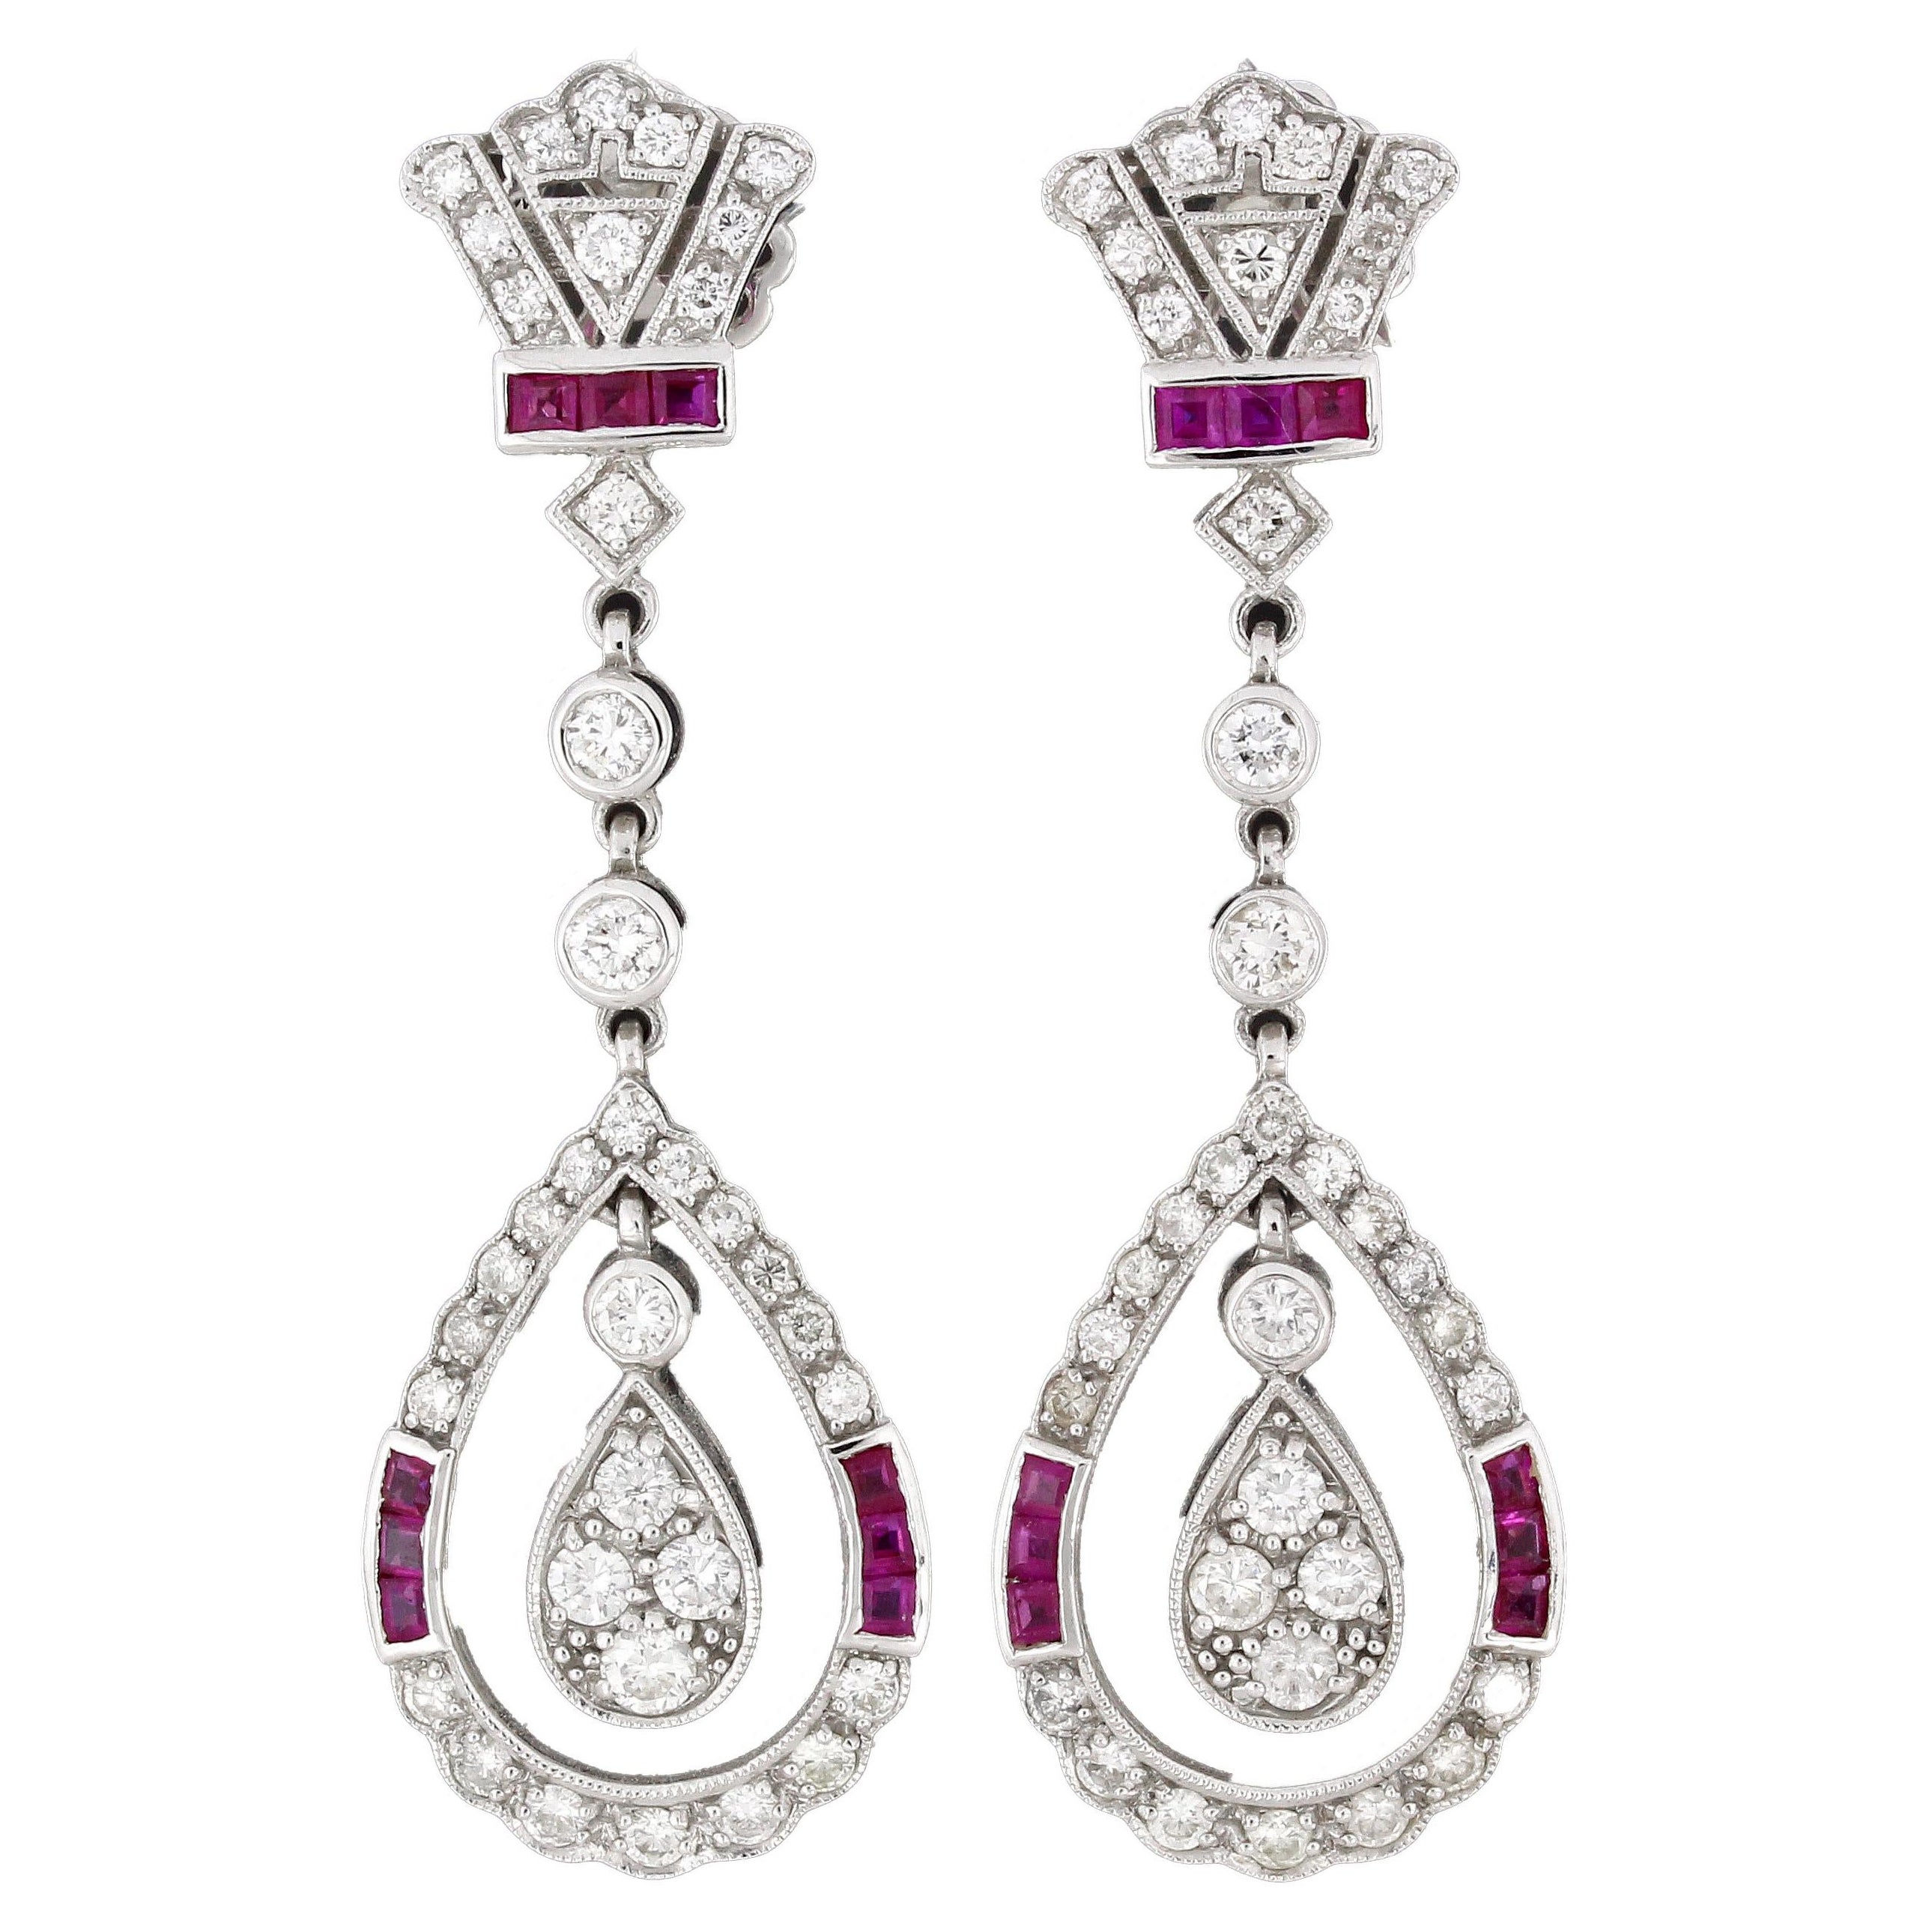 2.02 Carat Diamond Drop Earrings with Rubies